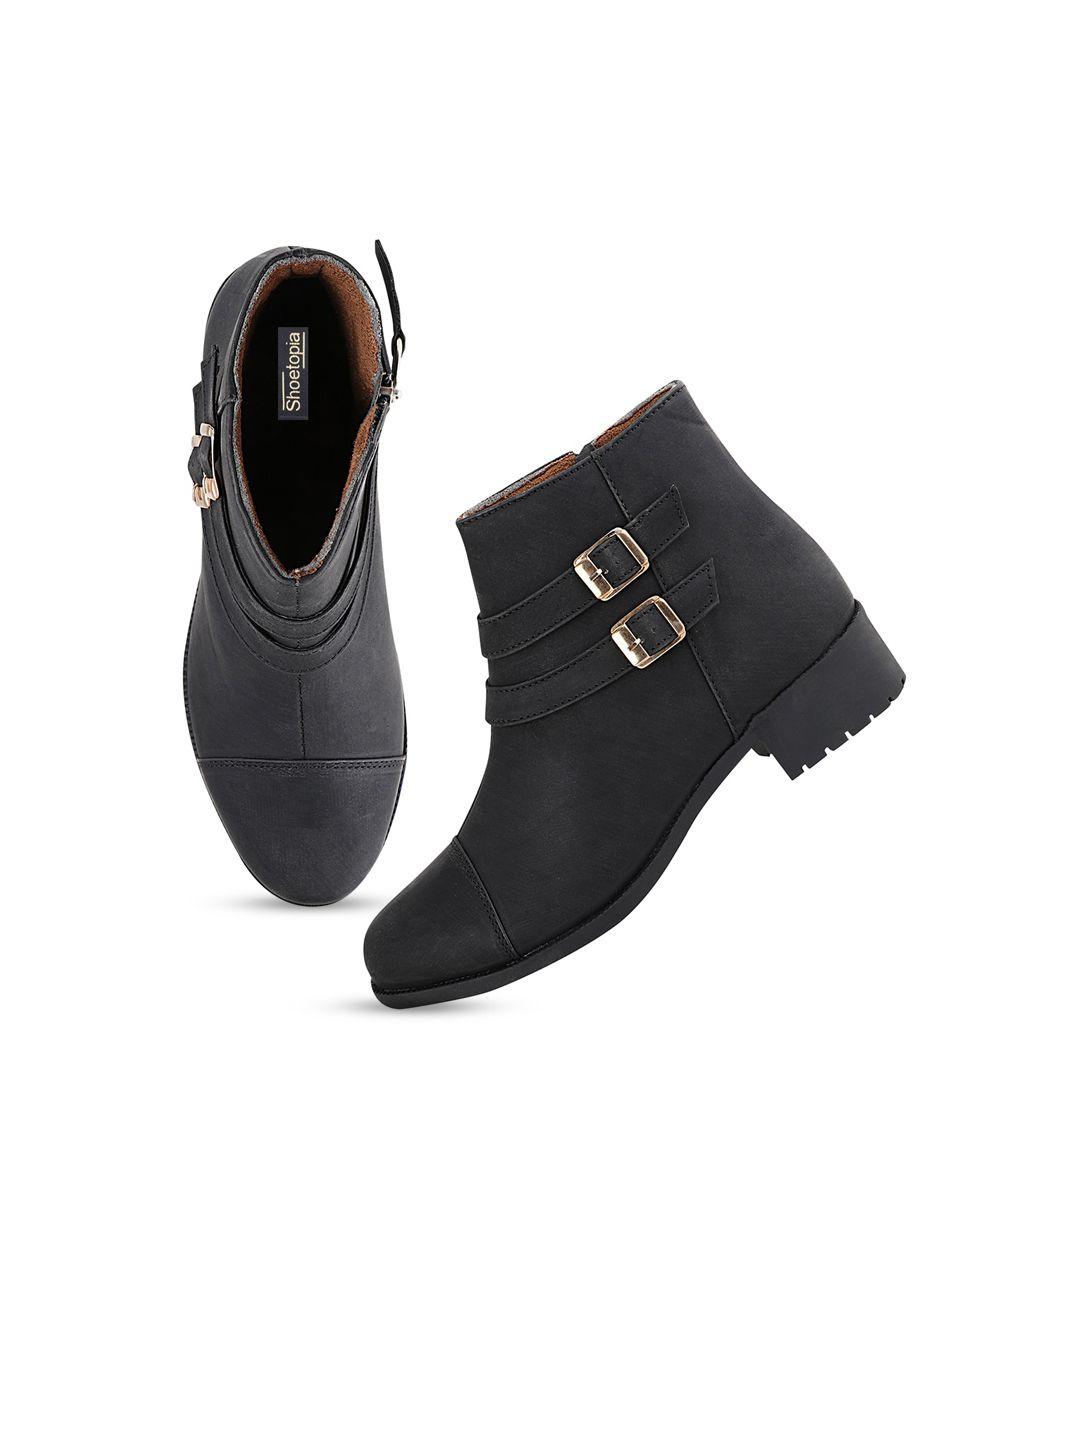 shoetopia black block heeled boots with buckles